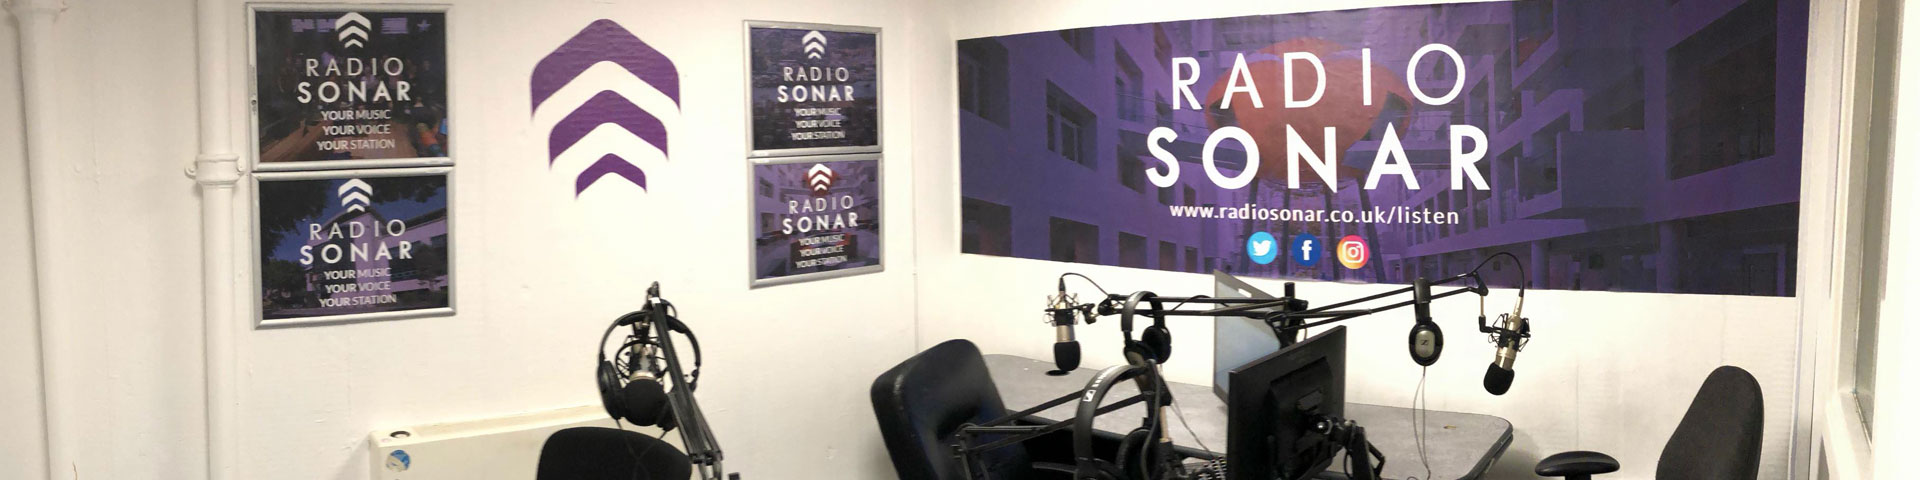 The Radio Sonar studio at Solent University